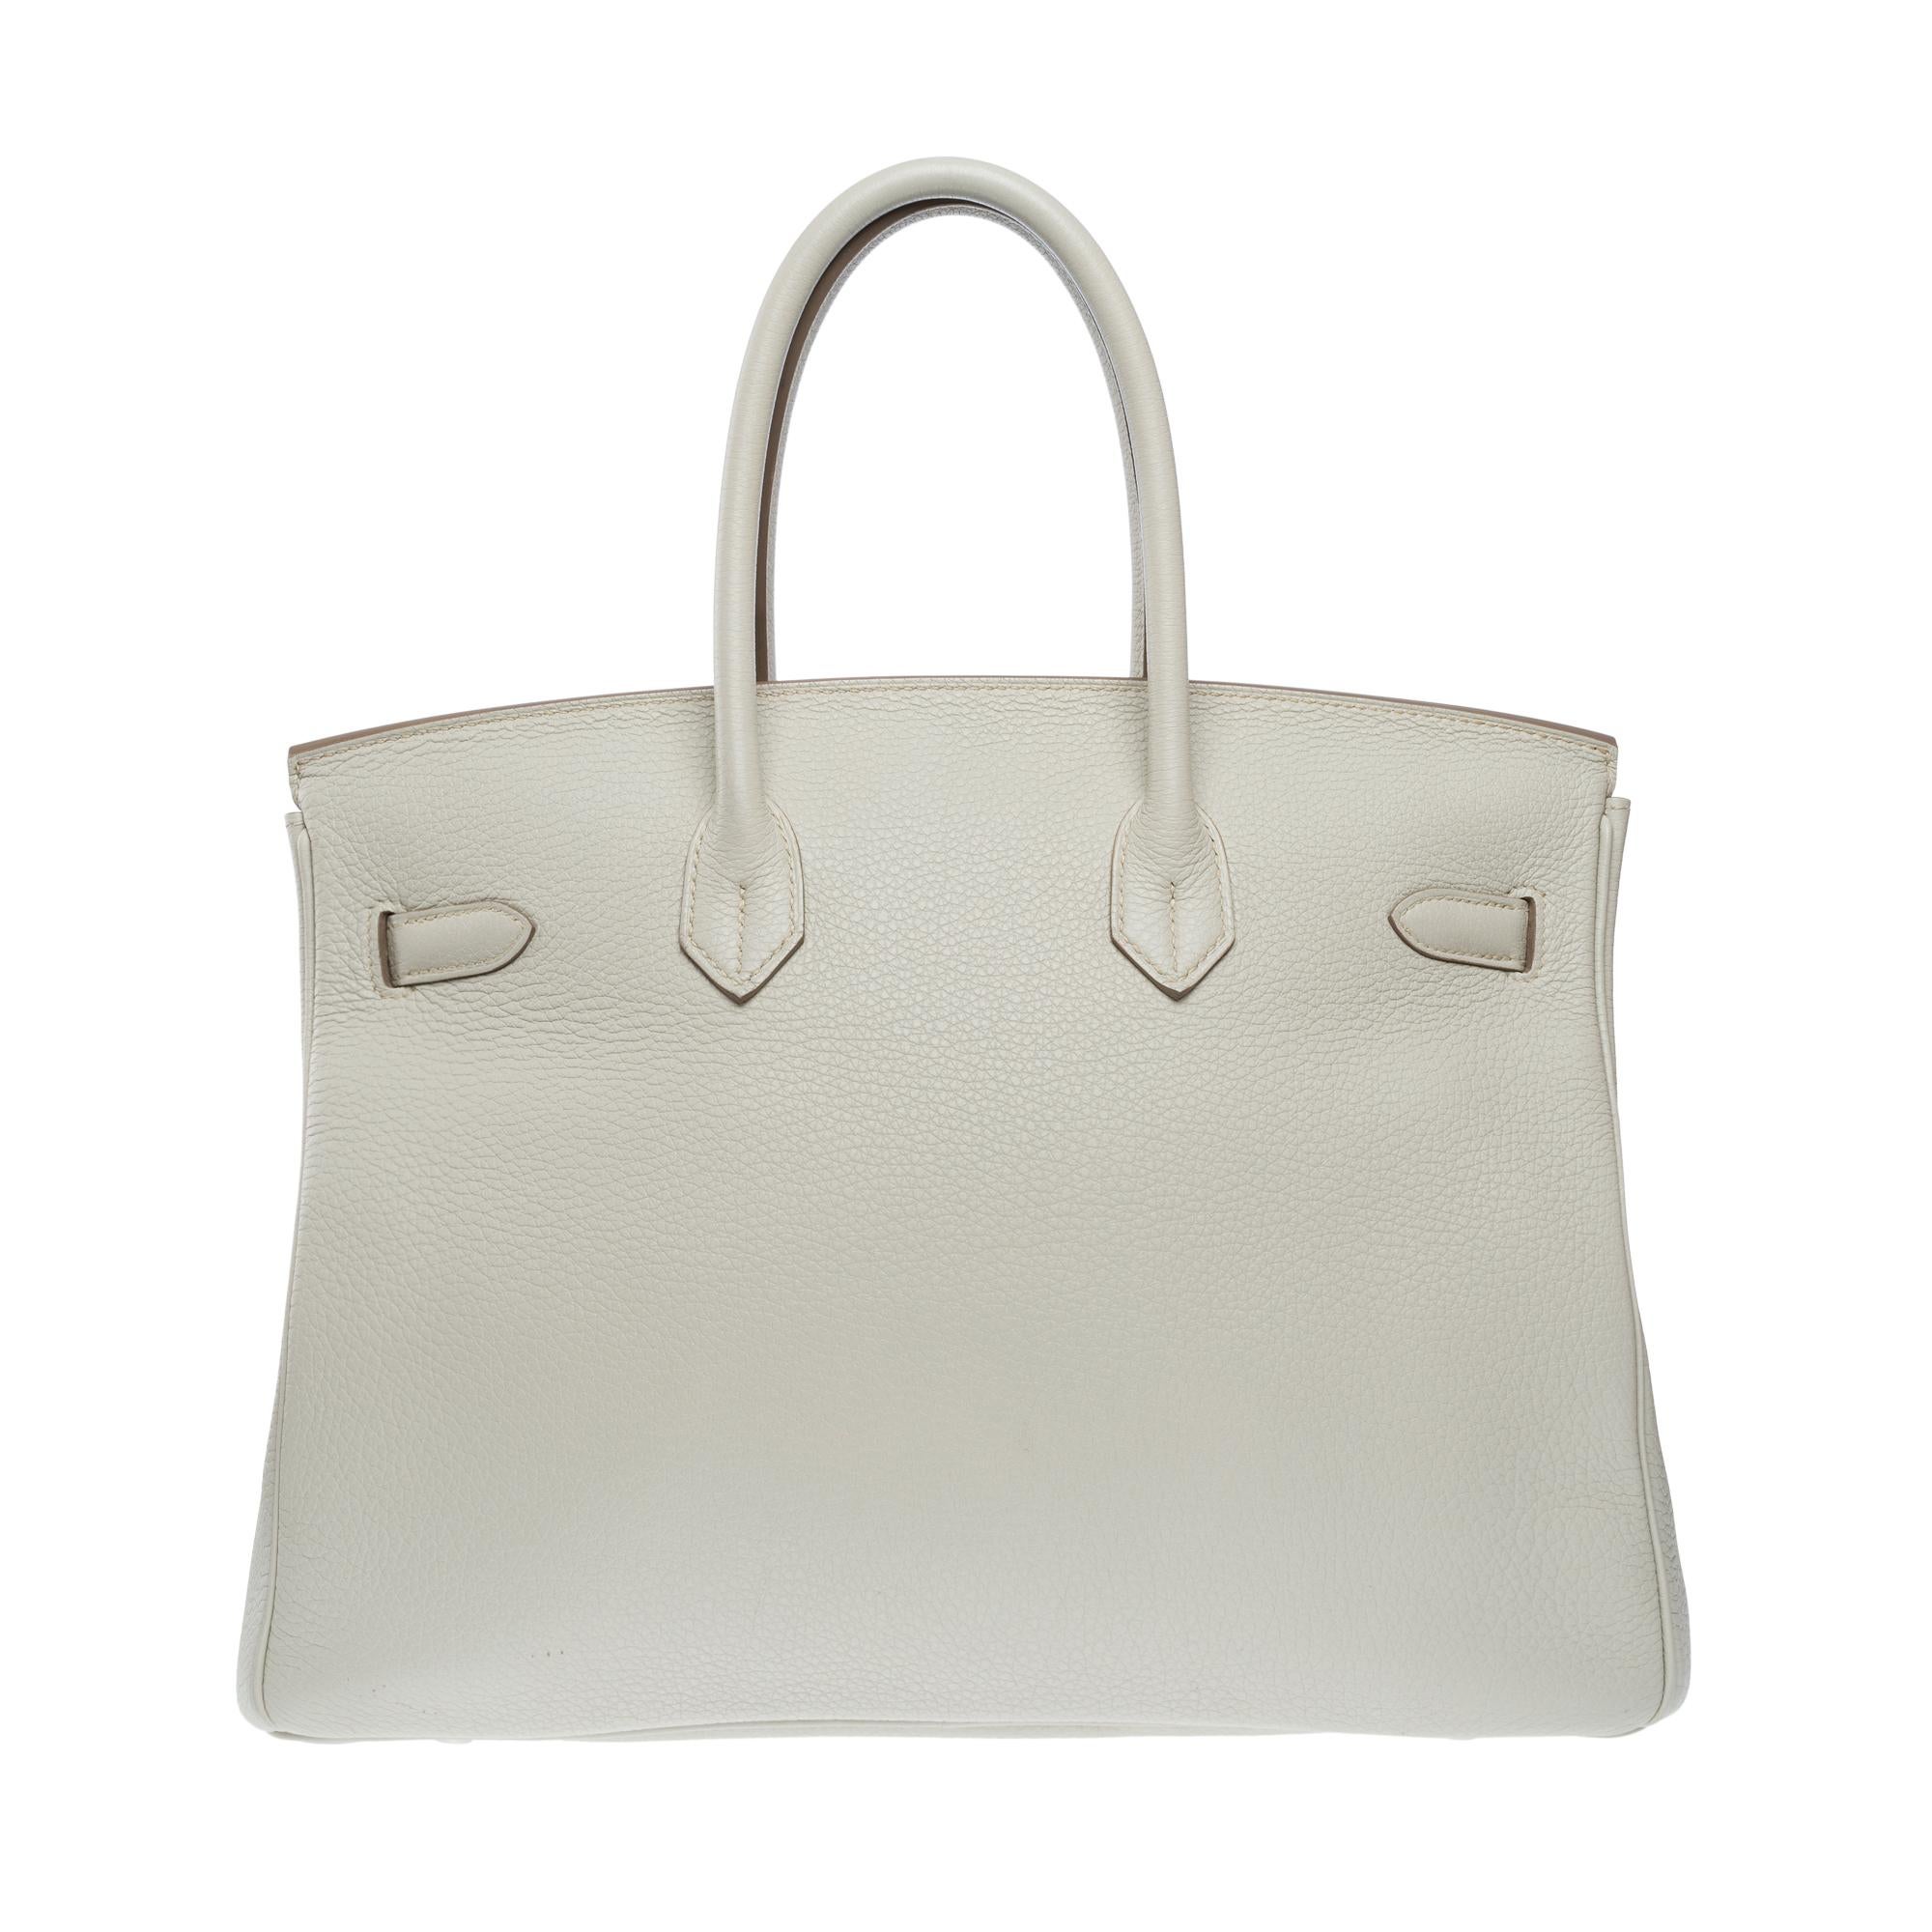 Amazing Hermès Birkin 35 handbag in Gris Perle Togo Calf leather, SHW For Sale 1